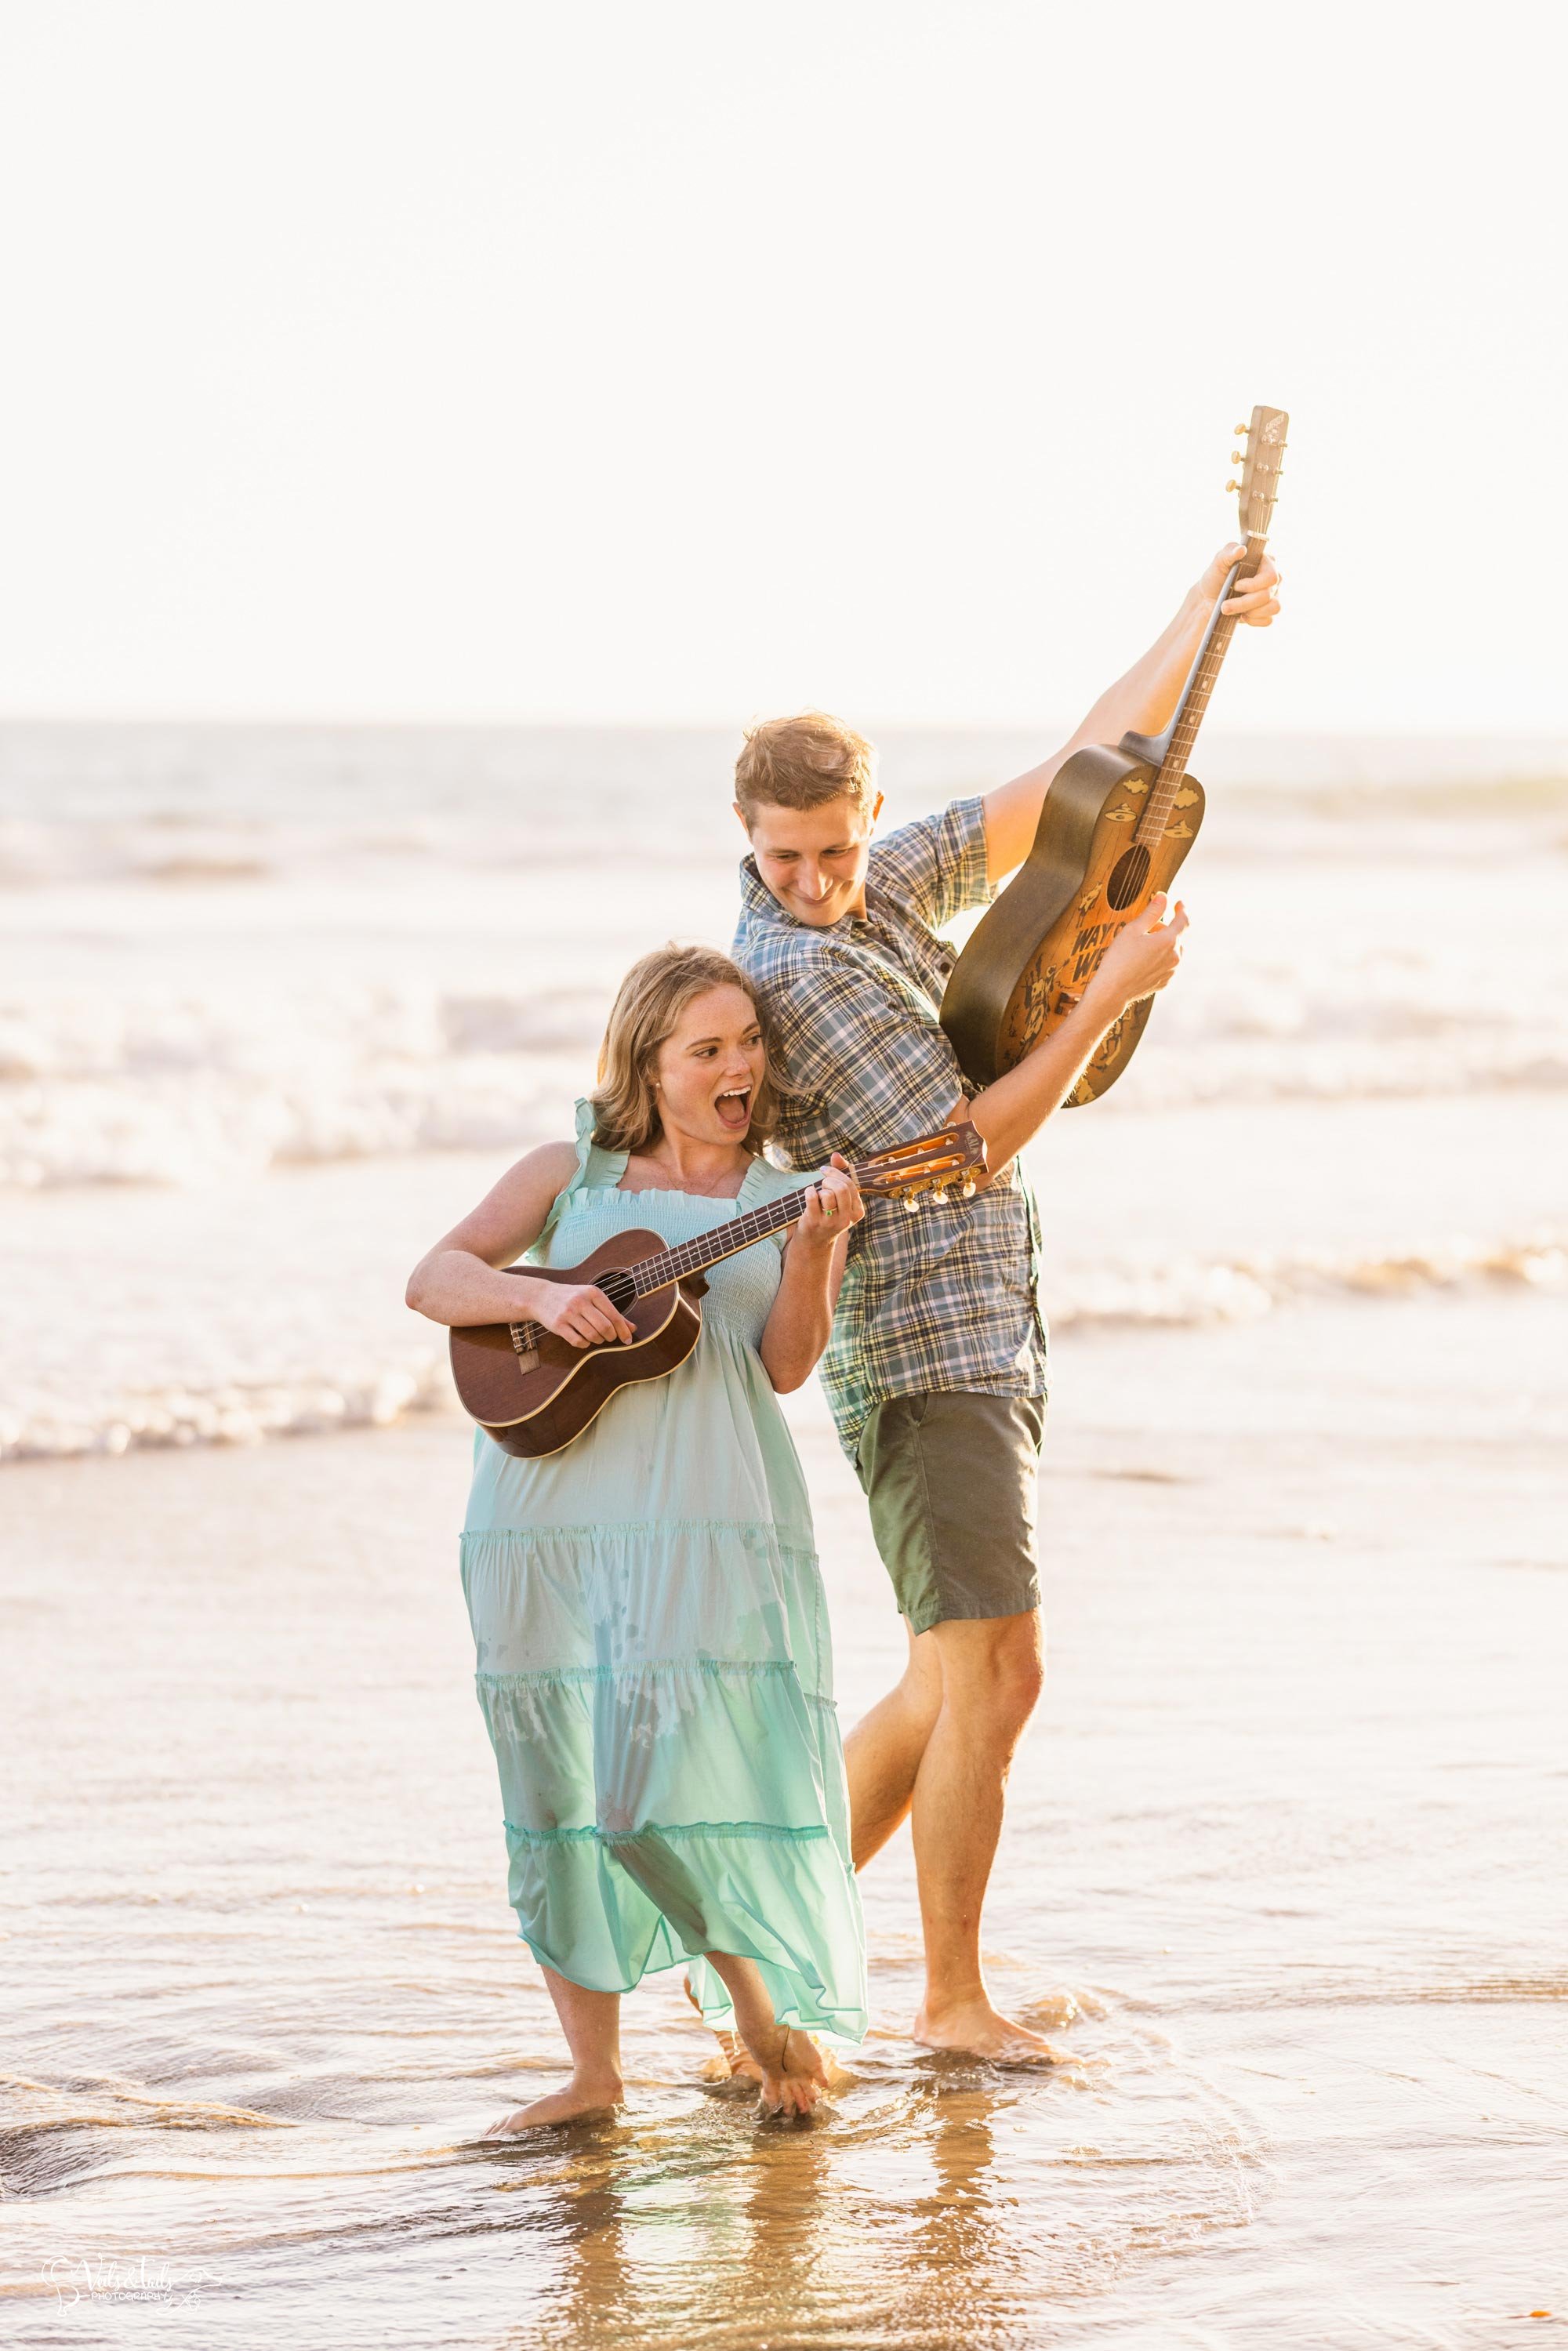 Santa Barbara photographer, beach engagement session with guitars